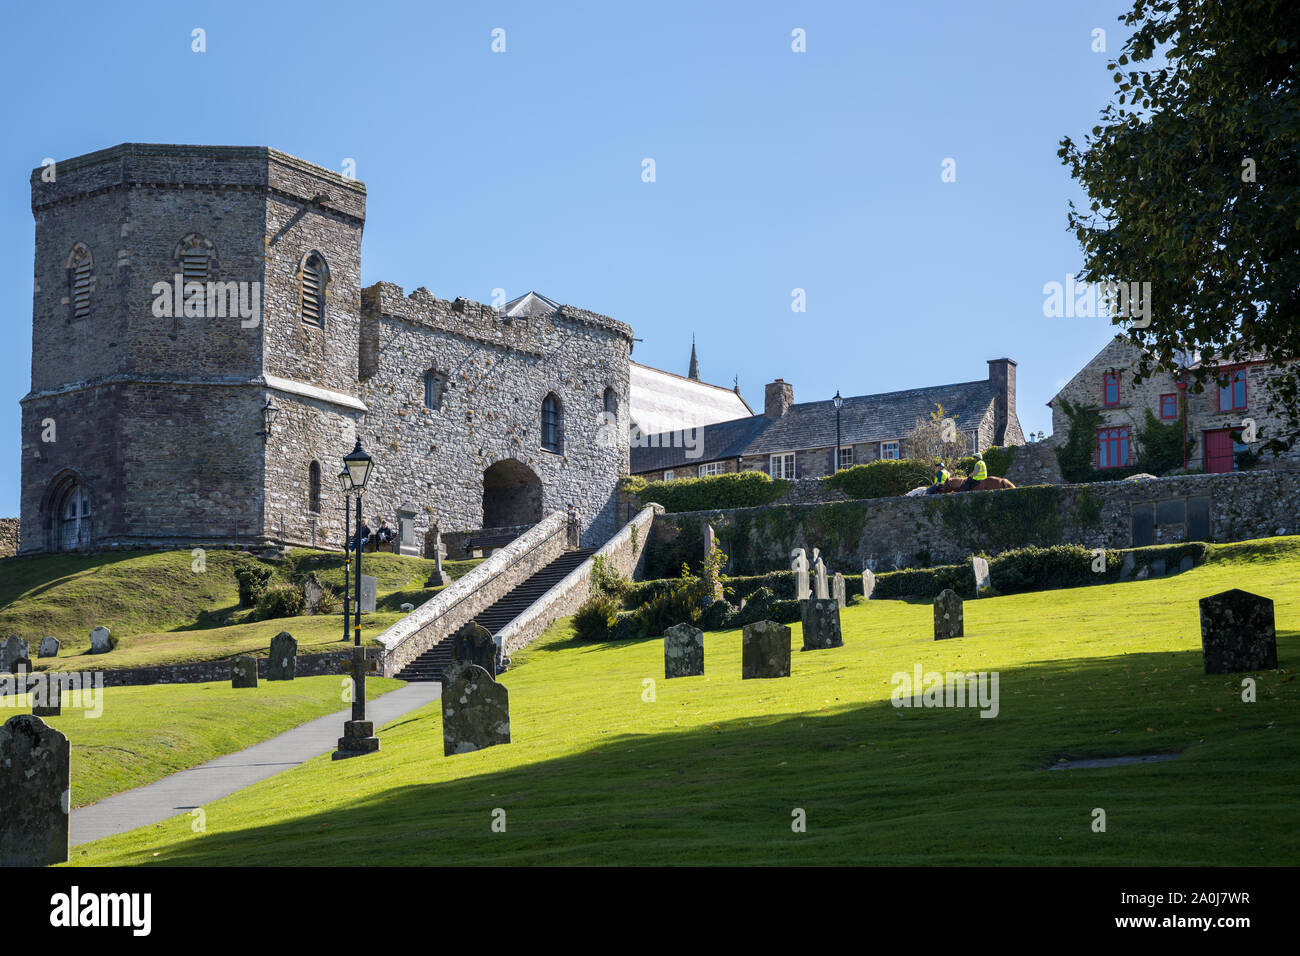 St David's, PEMBROKESHIRE/UK - 13. SEPTEMBER: Blick auf die Kathedrale von St. David's in Pembrokeshire am 13. September 2019. Vier unidentied Menschen Stockfoto